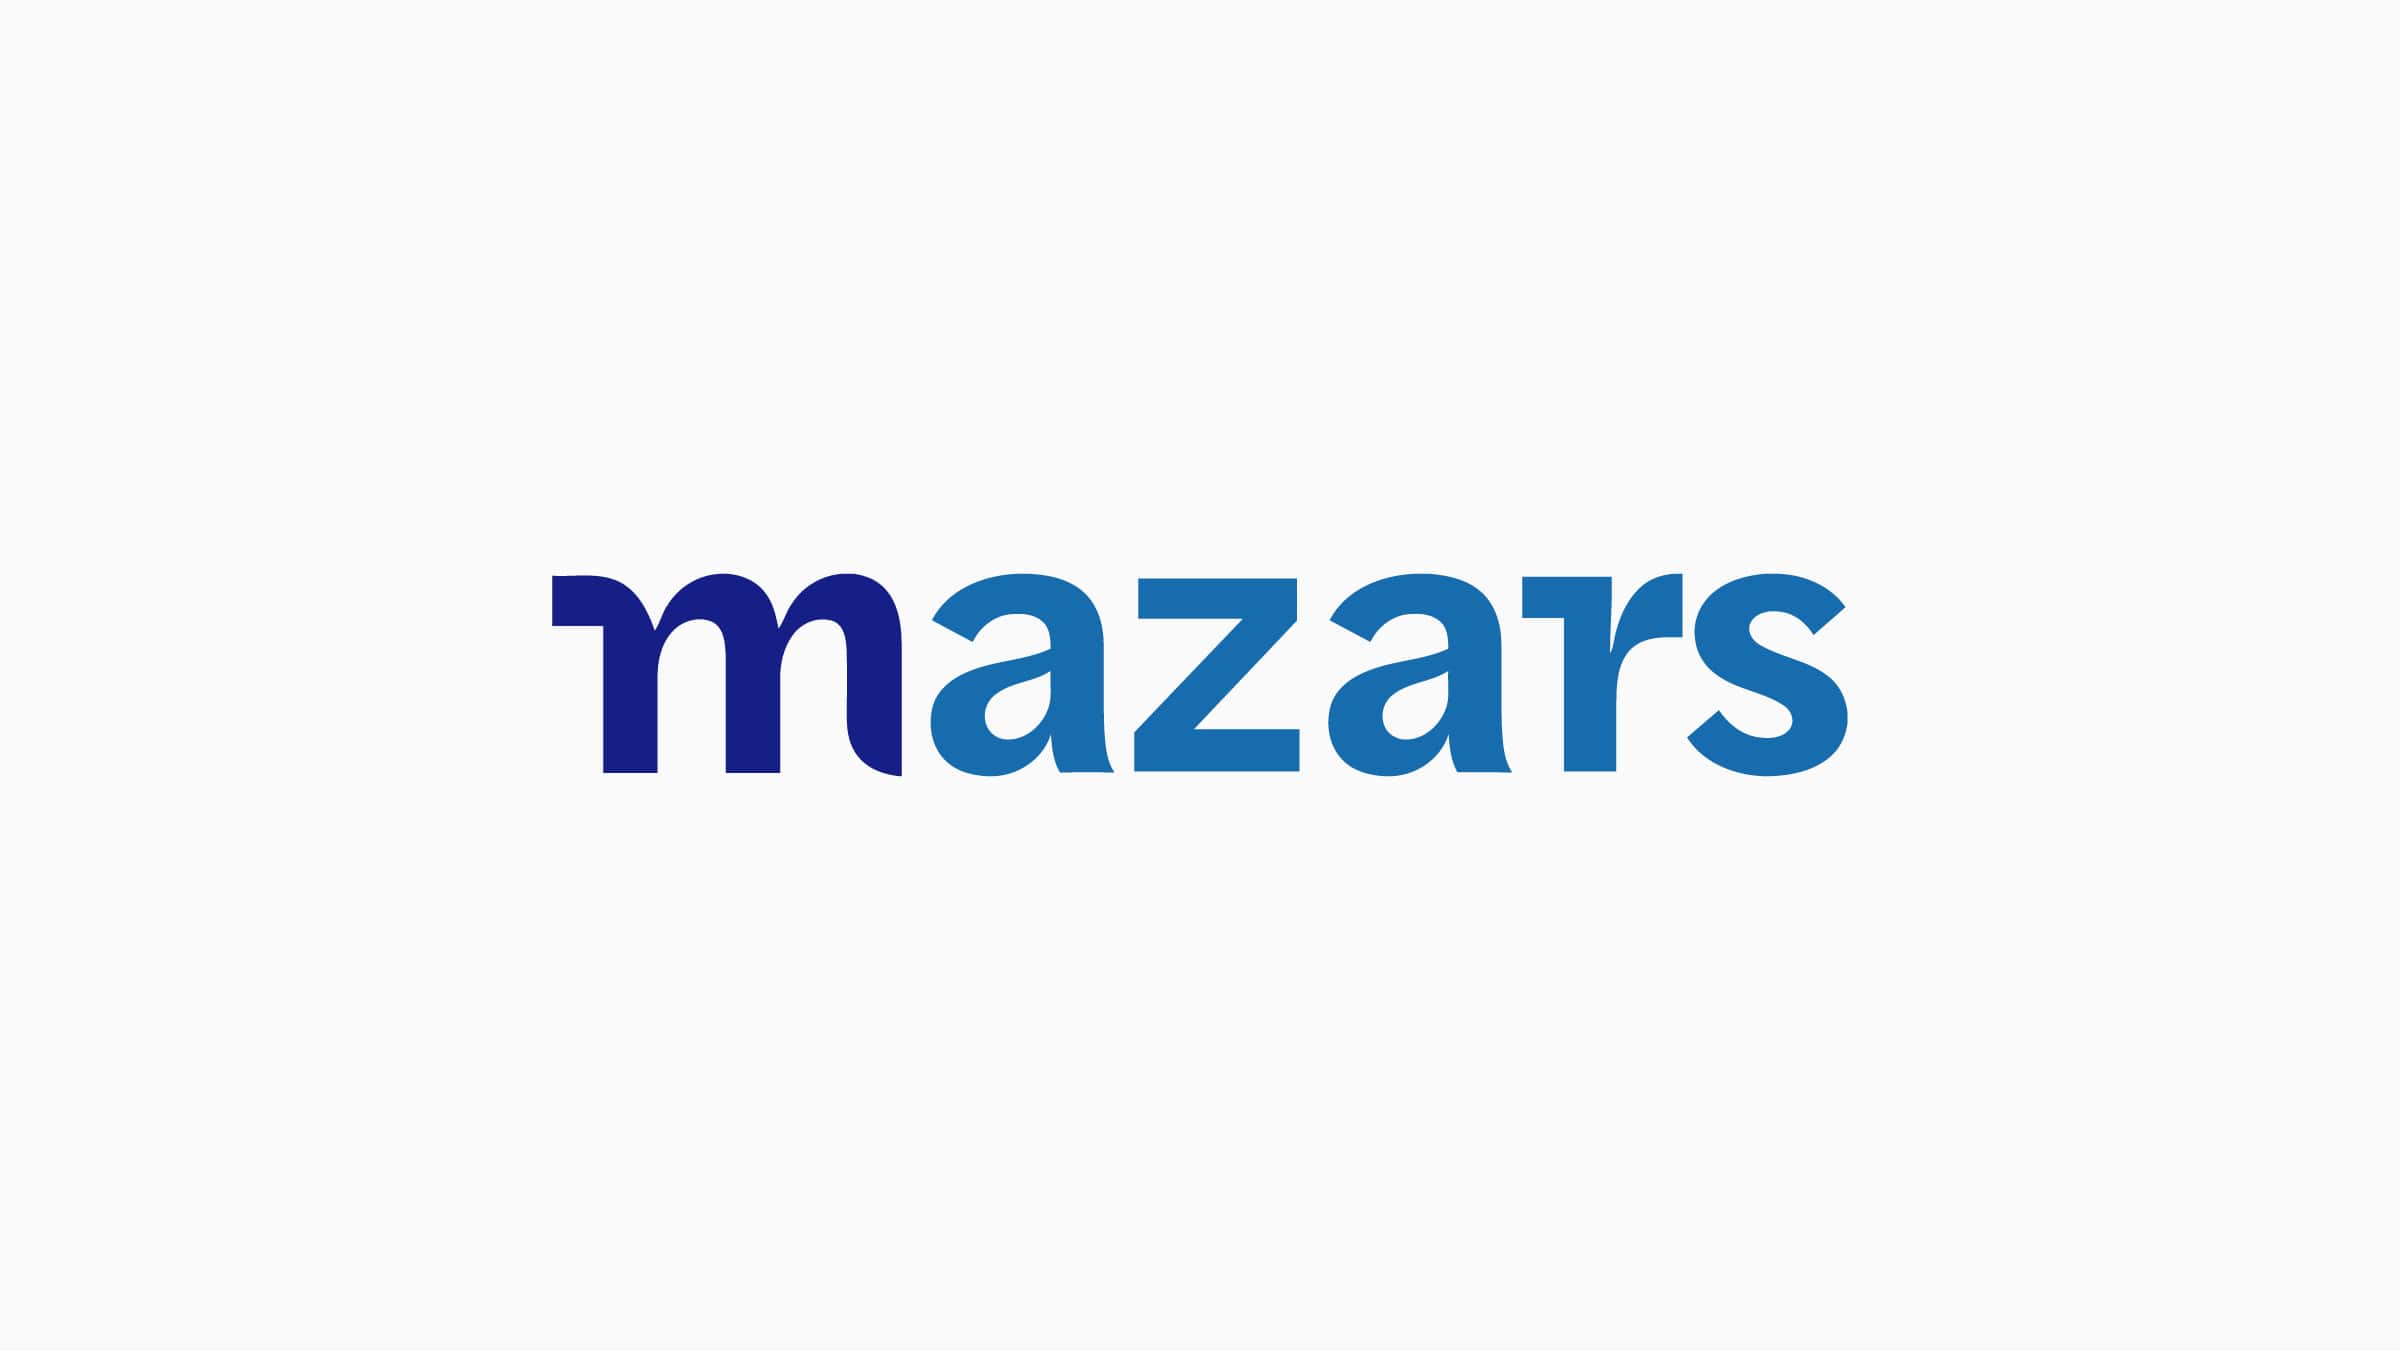 The Mazars logo